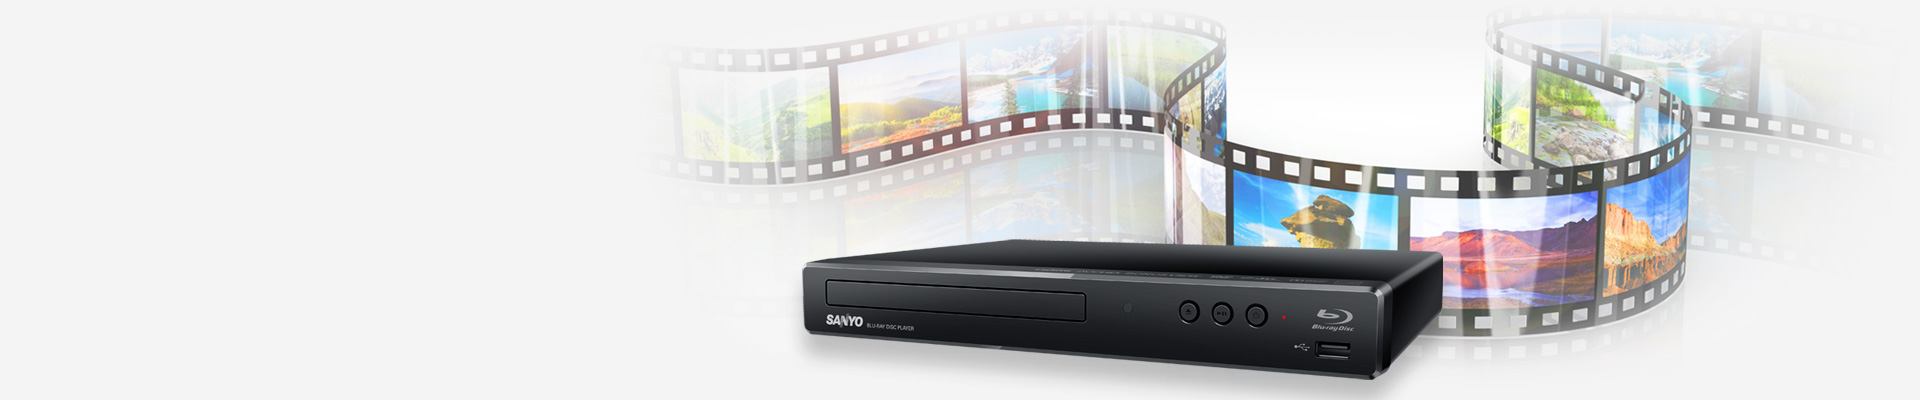 SANYO AV Products LED TV, Soundbar, Blu-ray Disc Players, DVD